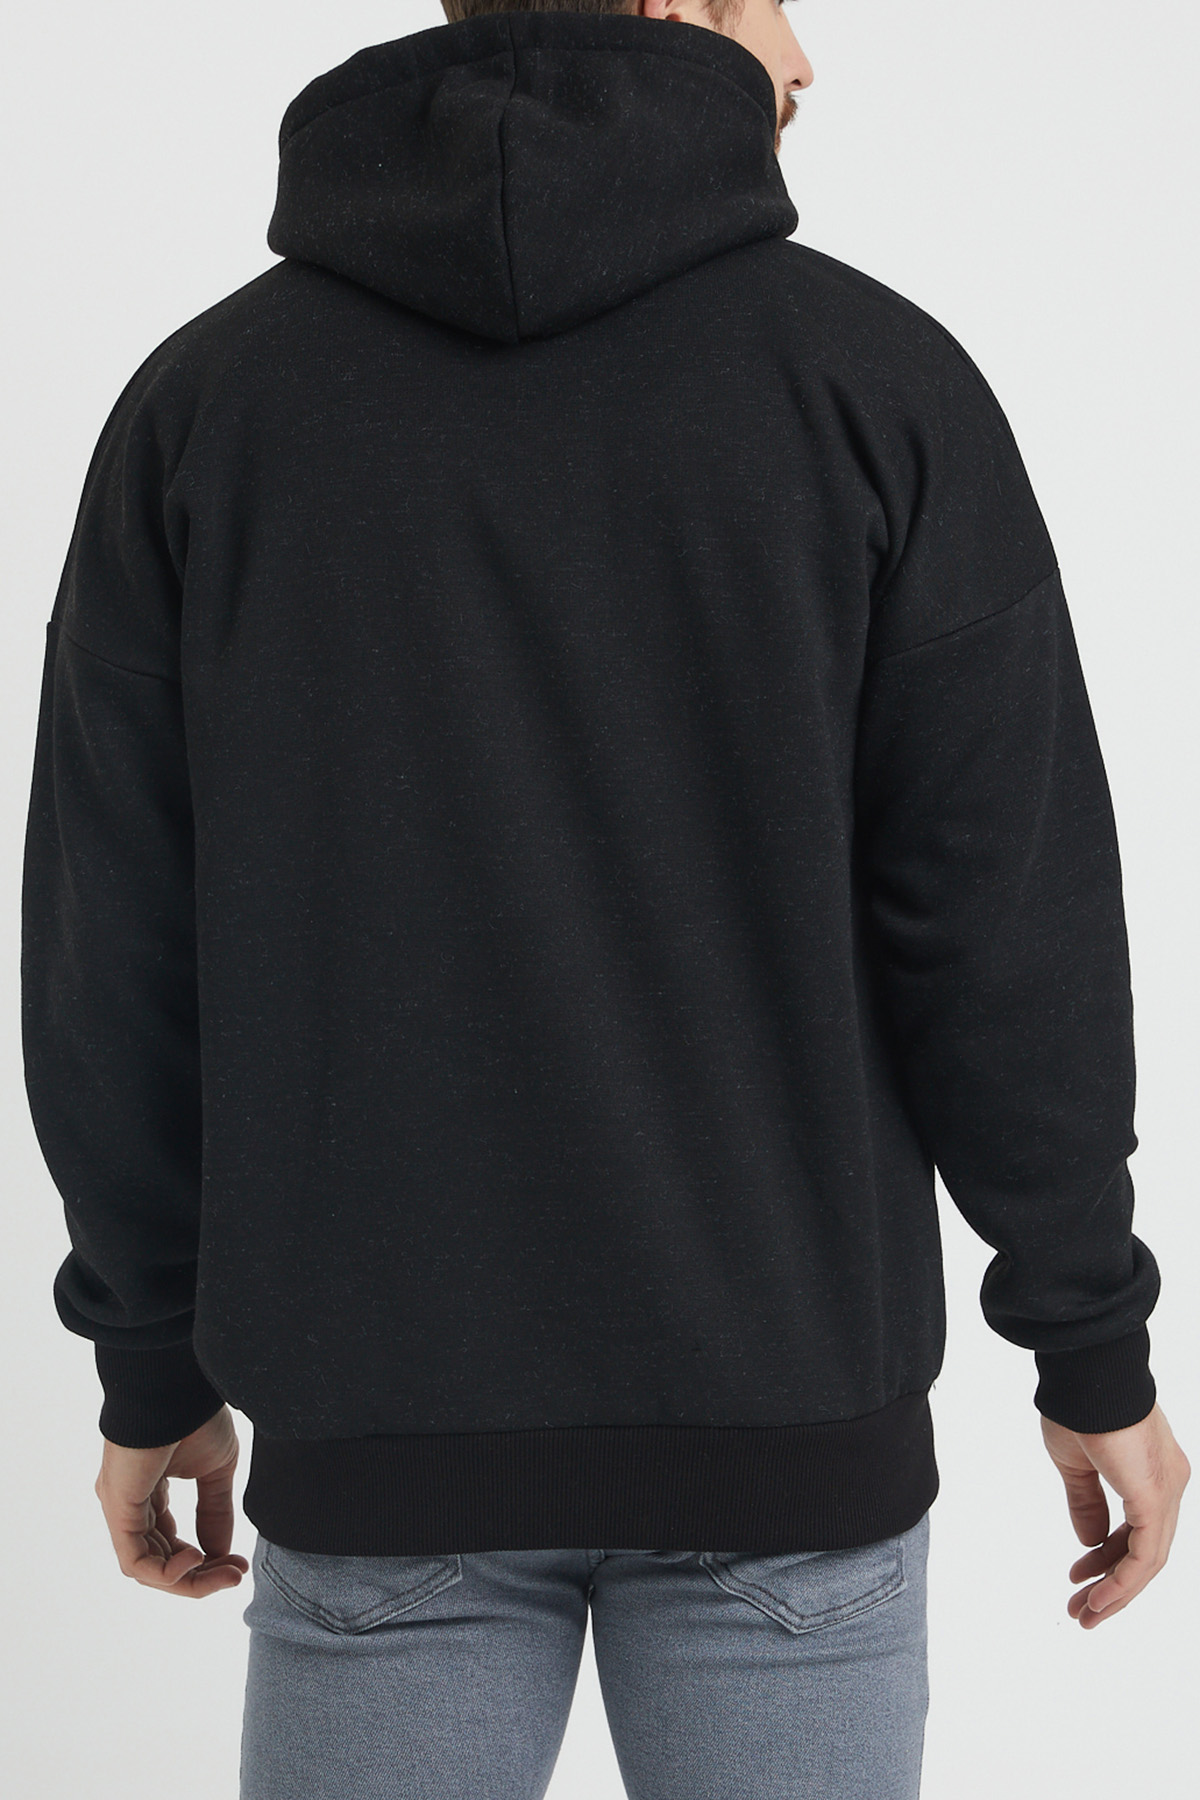 Siyah Baskılı Sweatshirt 1KXE8-44367-02 - 5